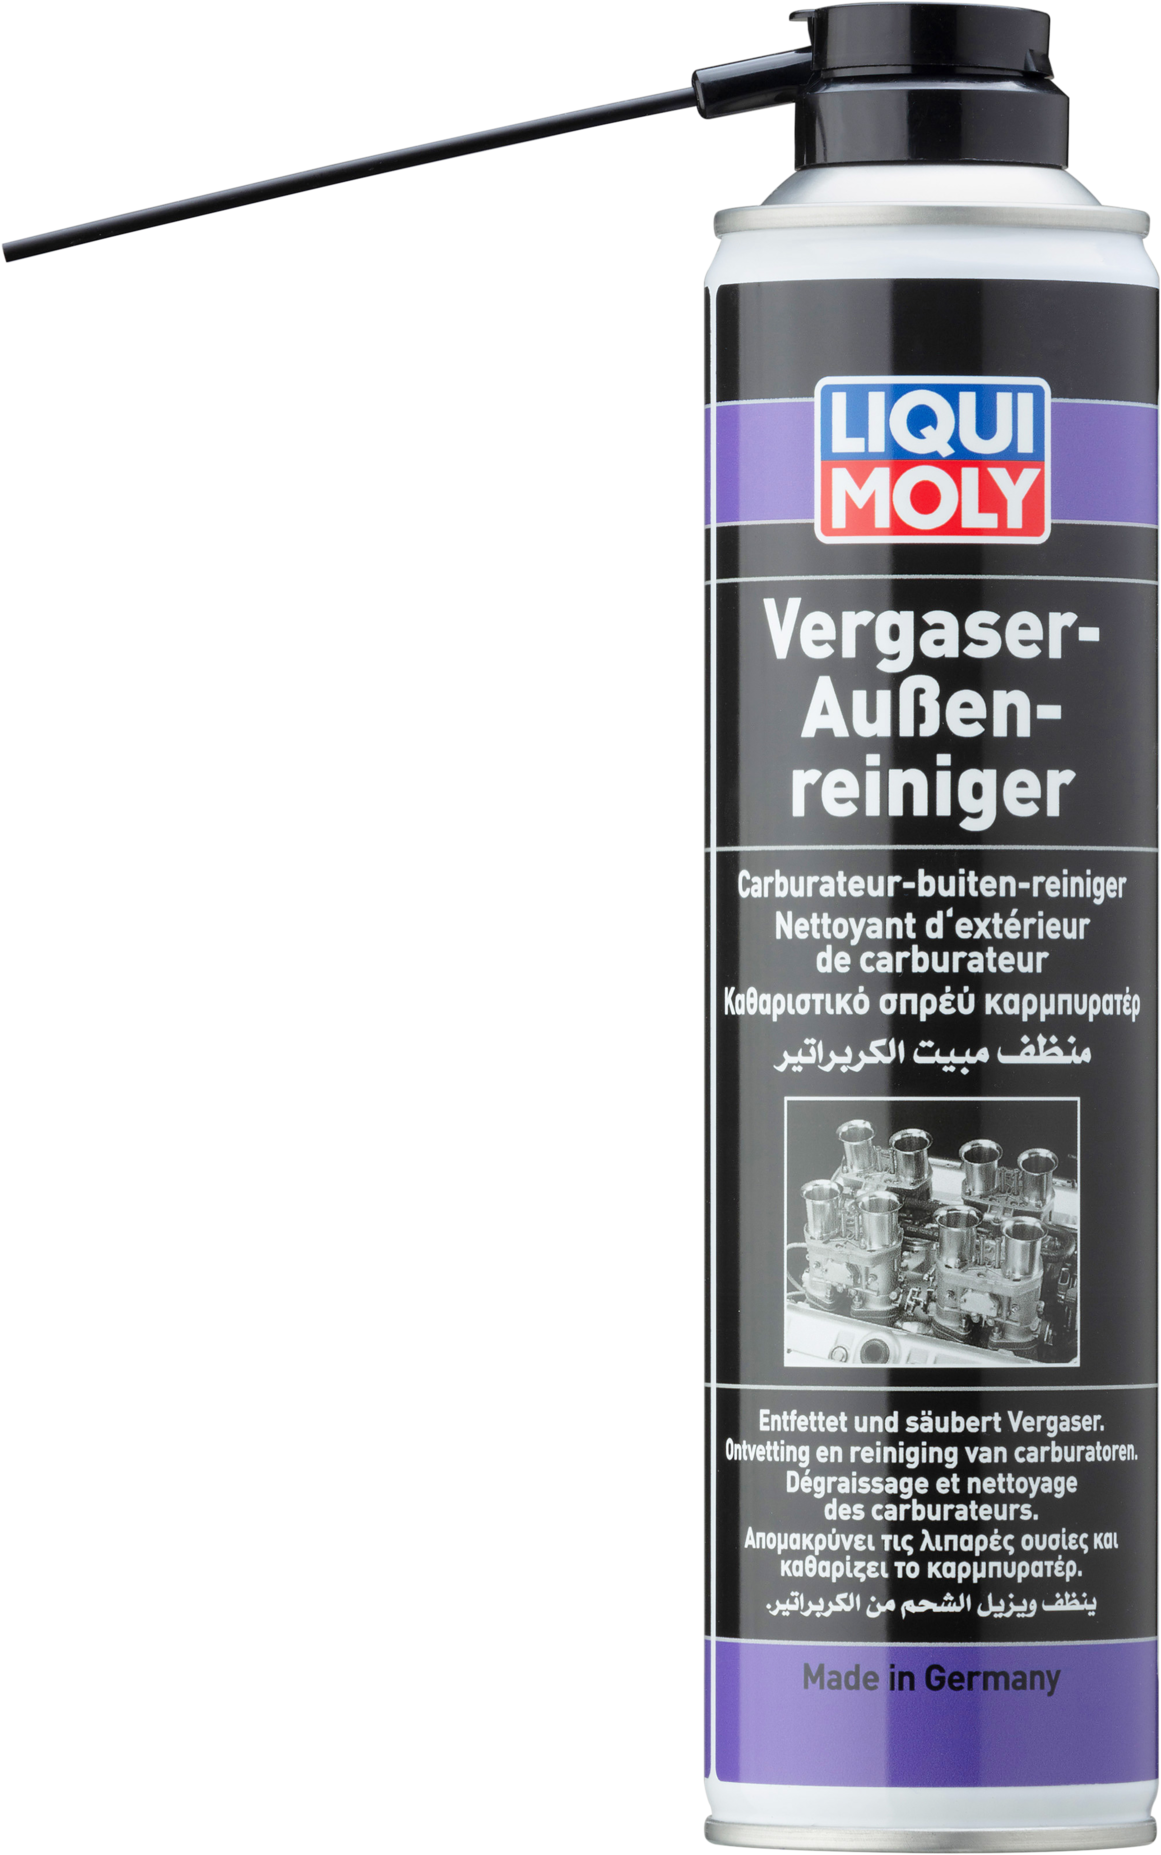 Liqui Moly Carburateur-buiten-reiniger, 400 ml